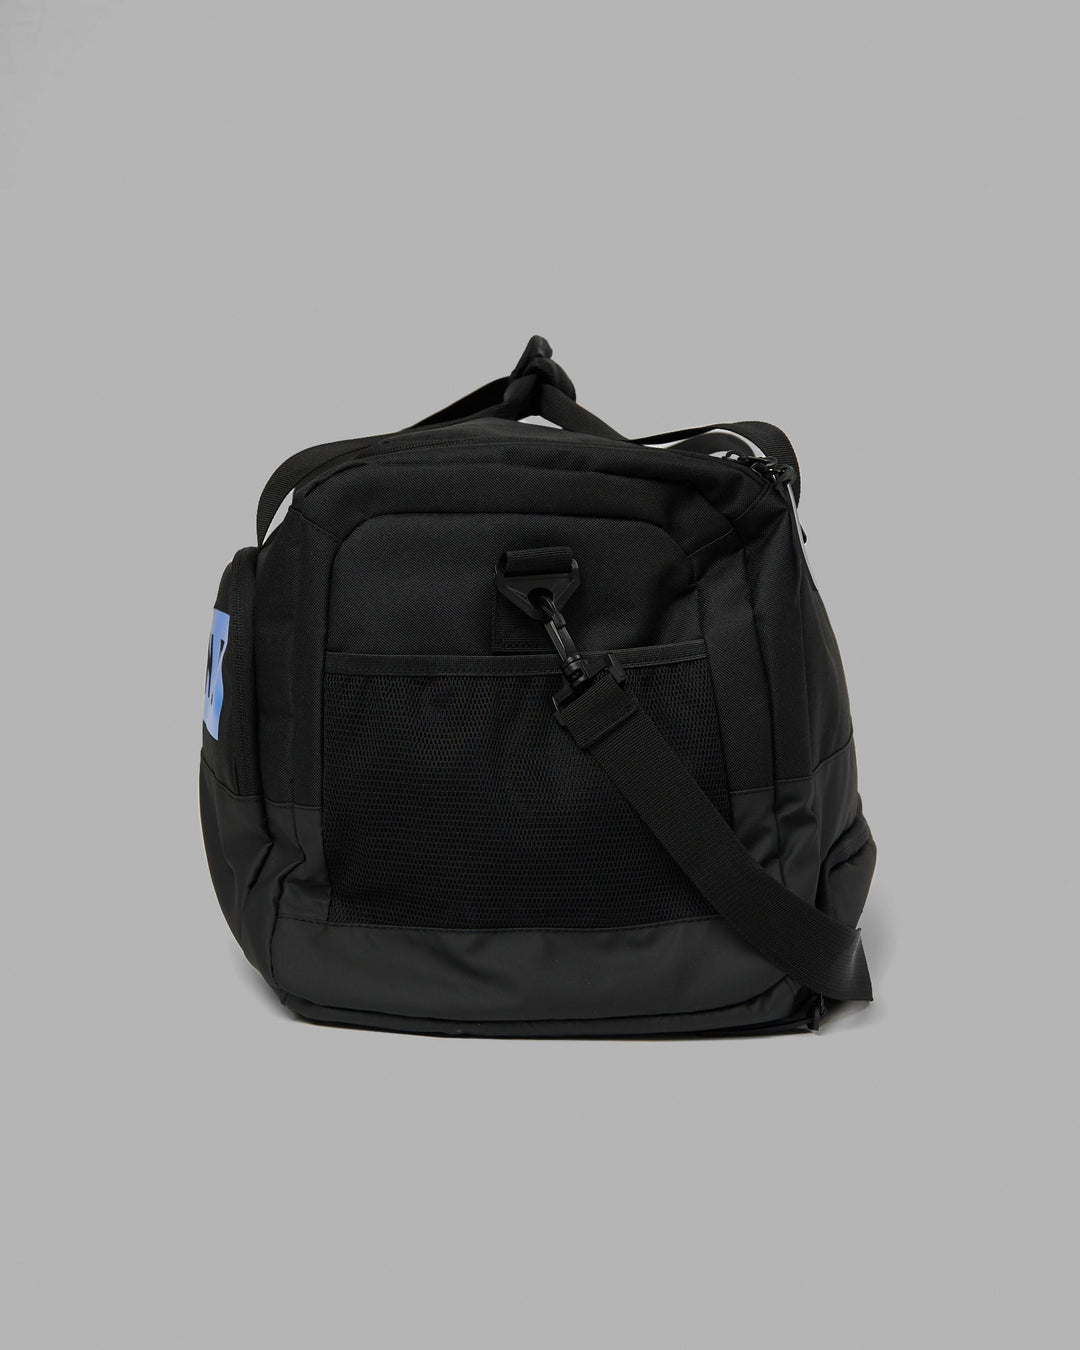 Rep Duffle Bag 50L - Black - Cornflower Blue